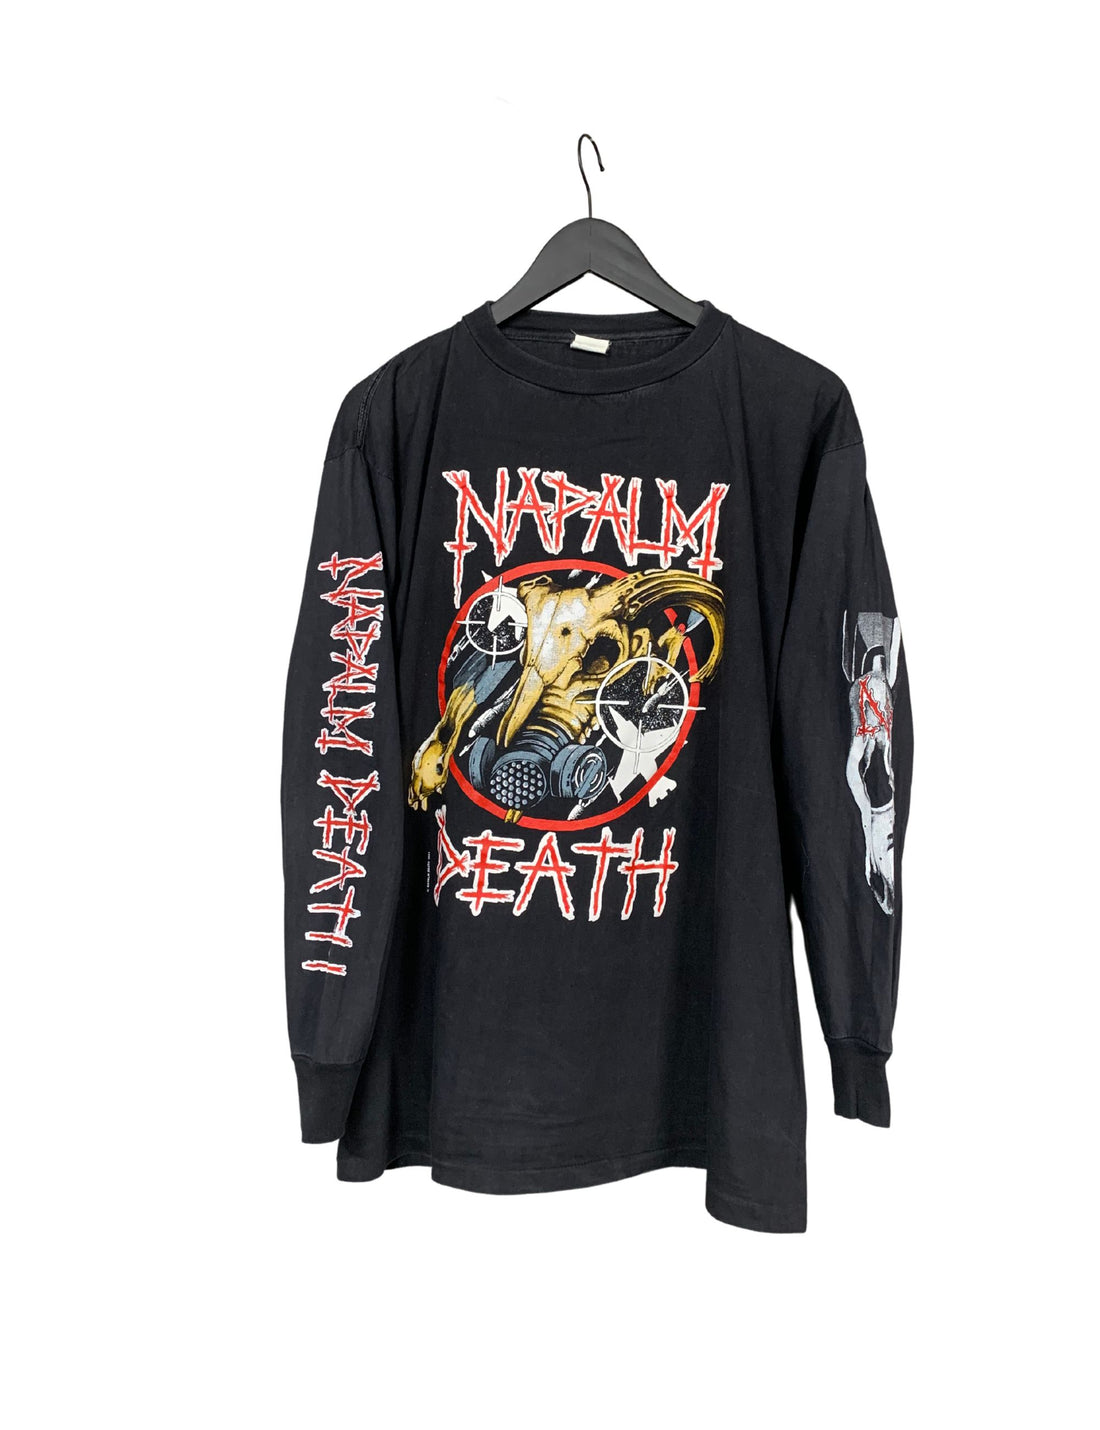 Napalm Death 1991 Vintage Longsleeve